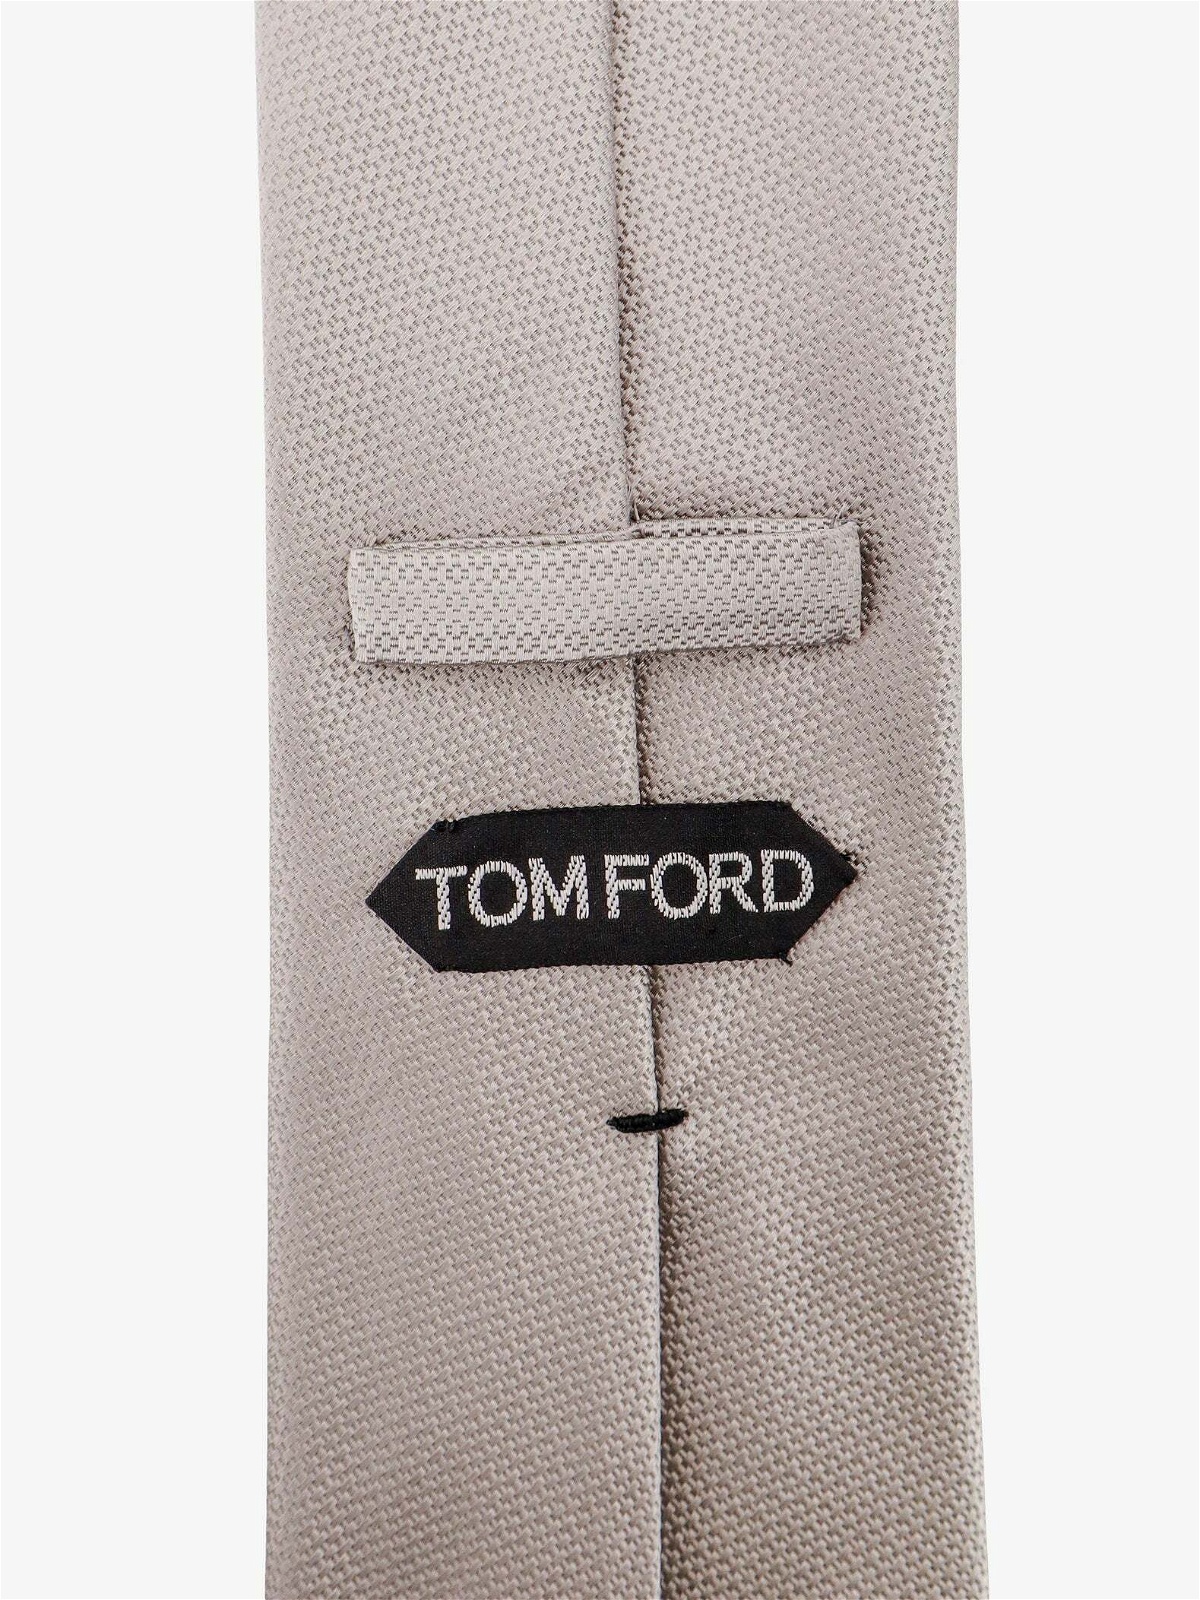 Tom Ford Tie Grey Mens TOM FORD